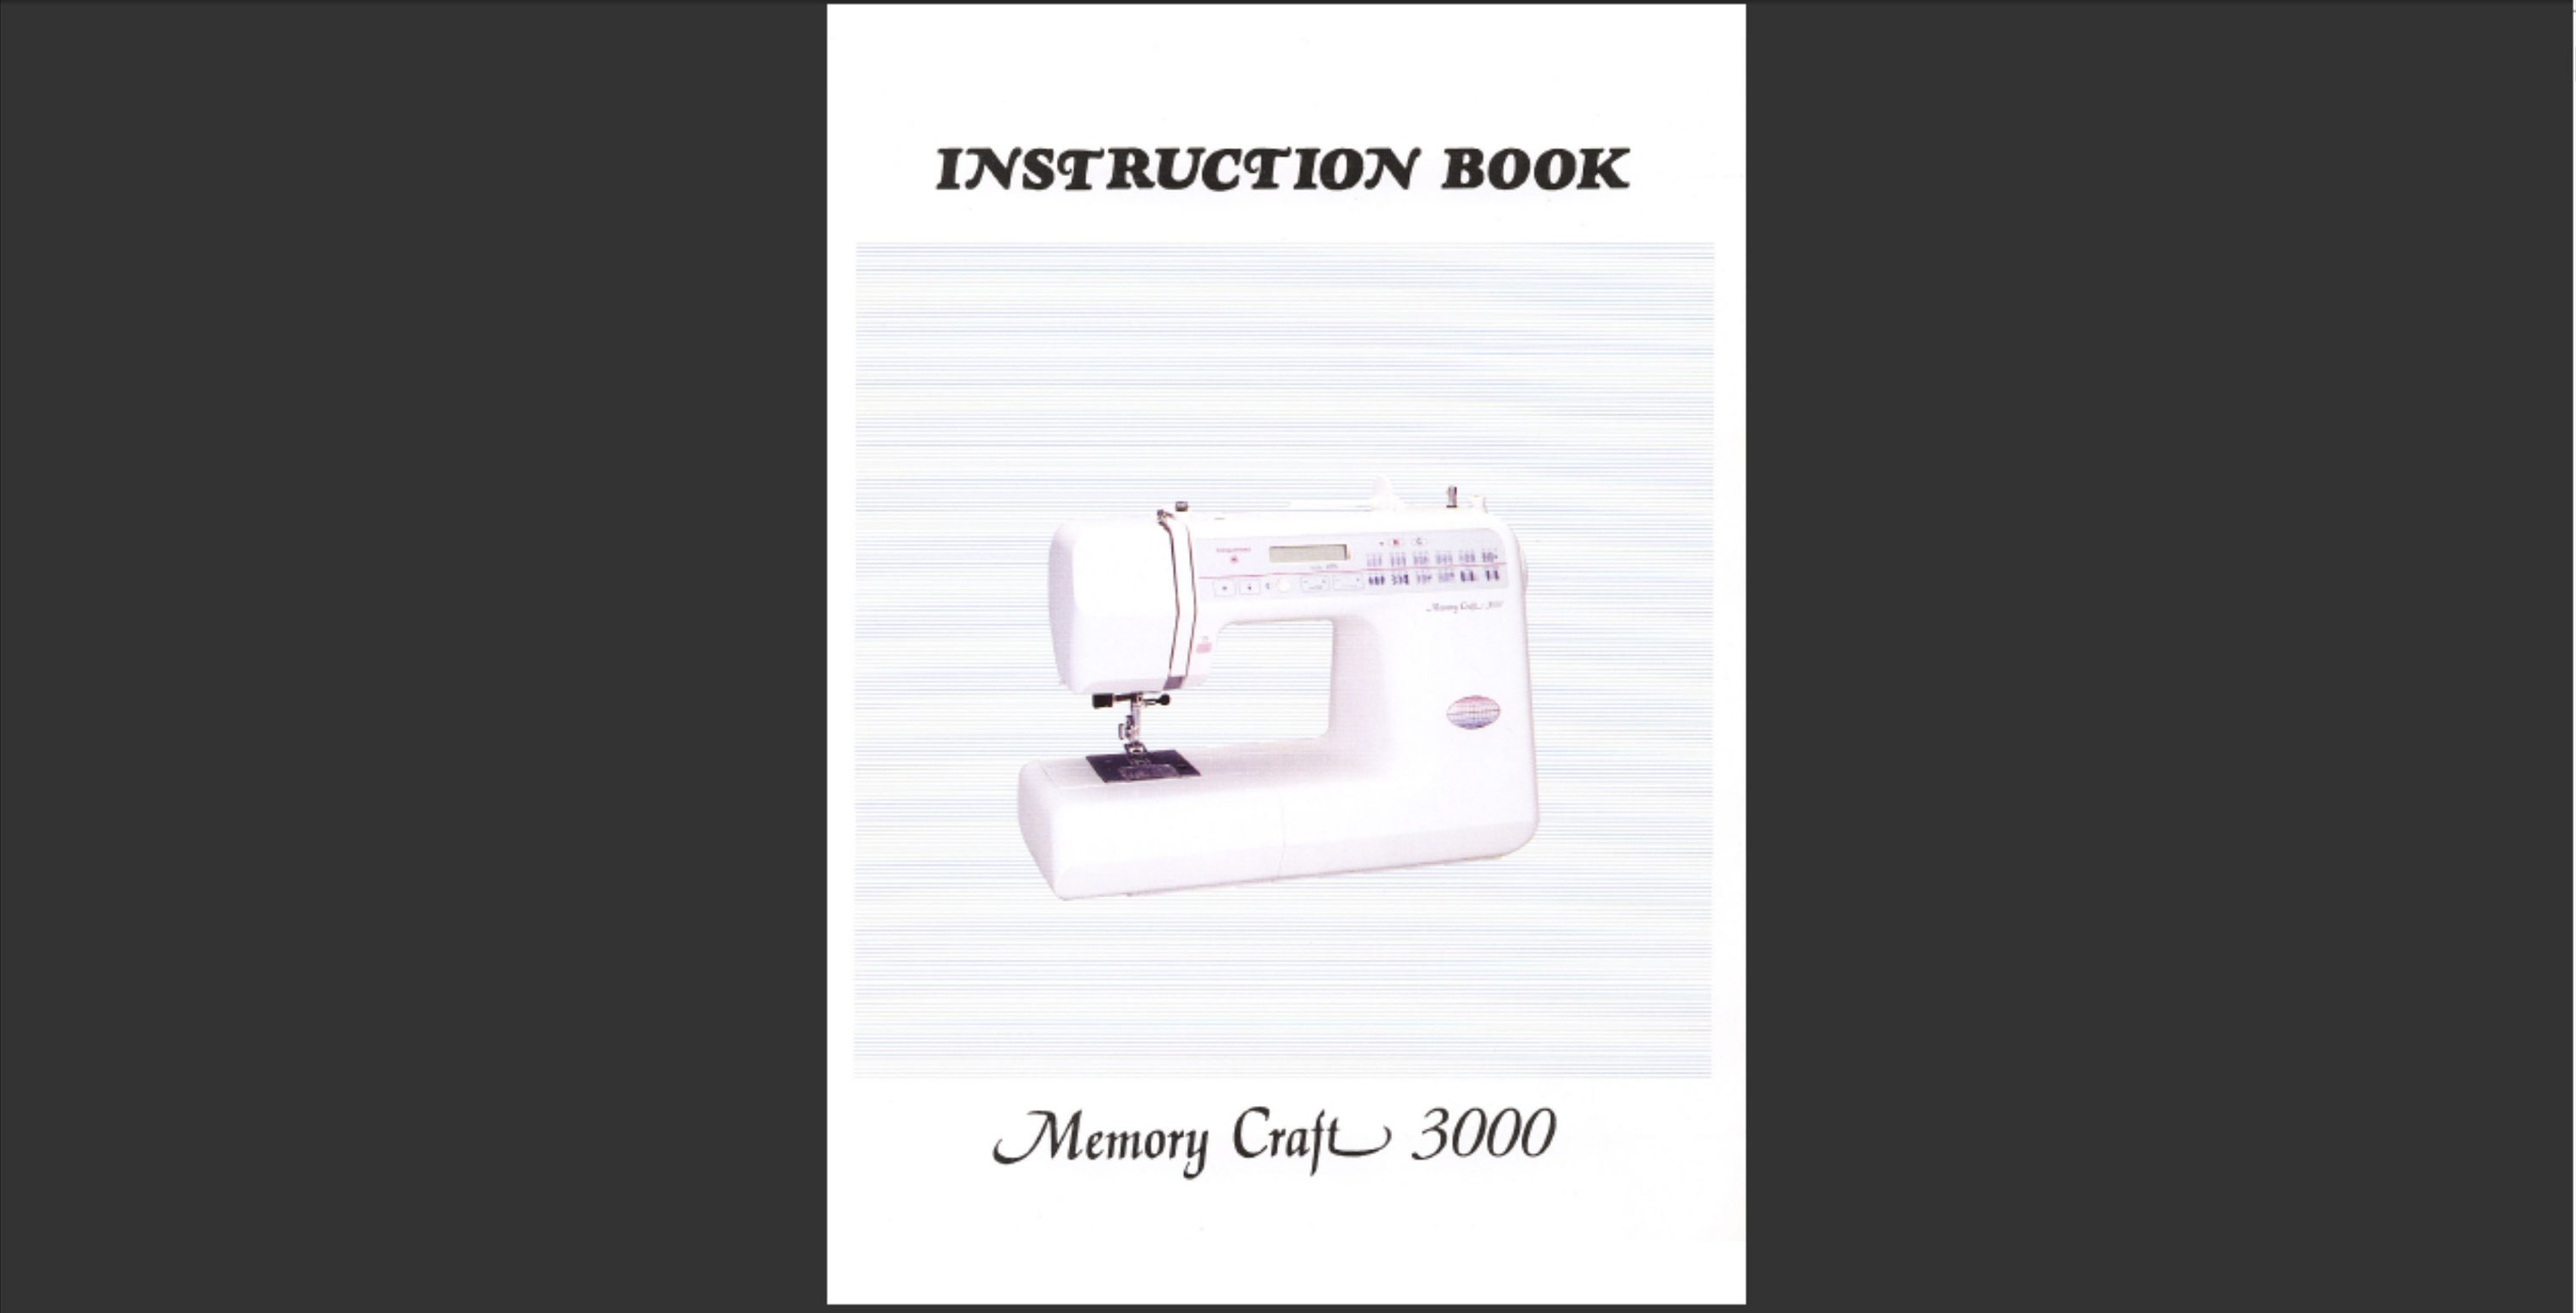 Janome HD3000 Sewing Machine Instruction Manual User Manual